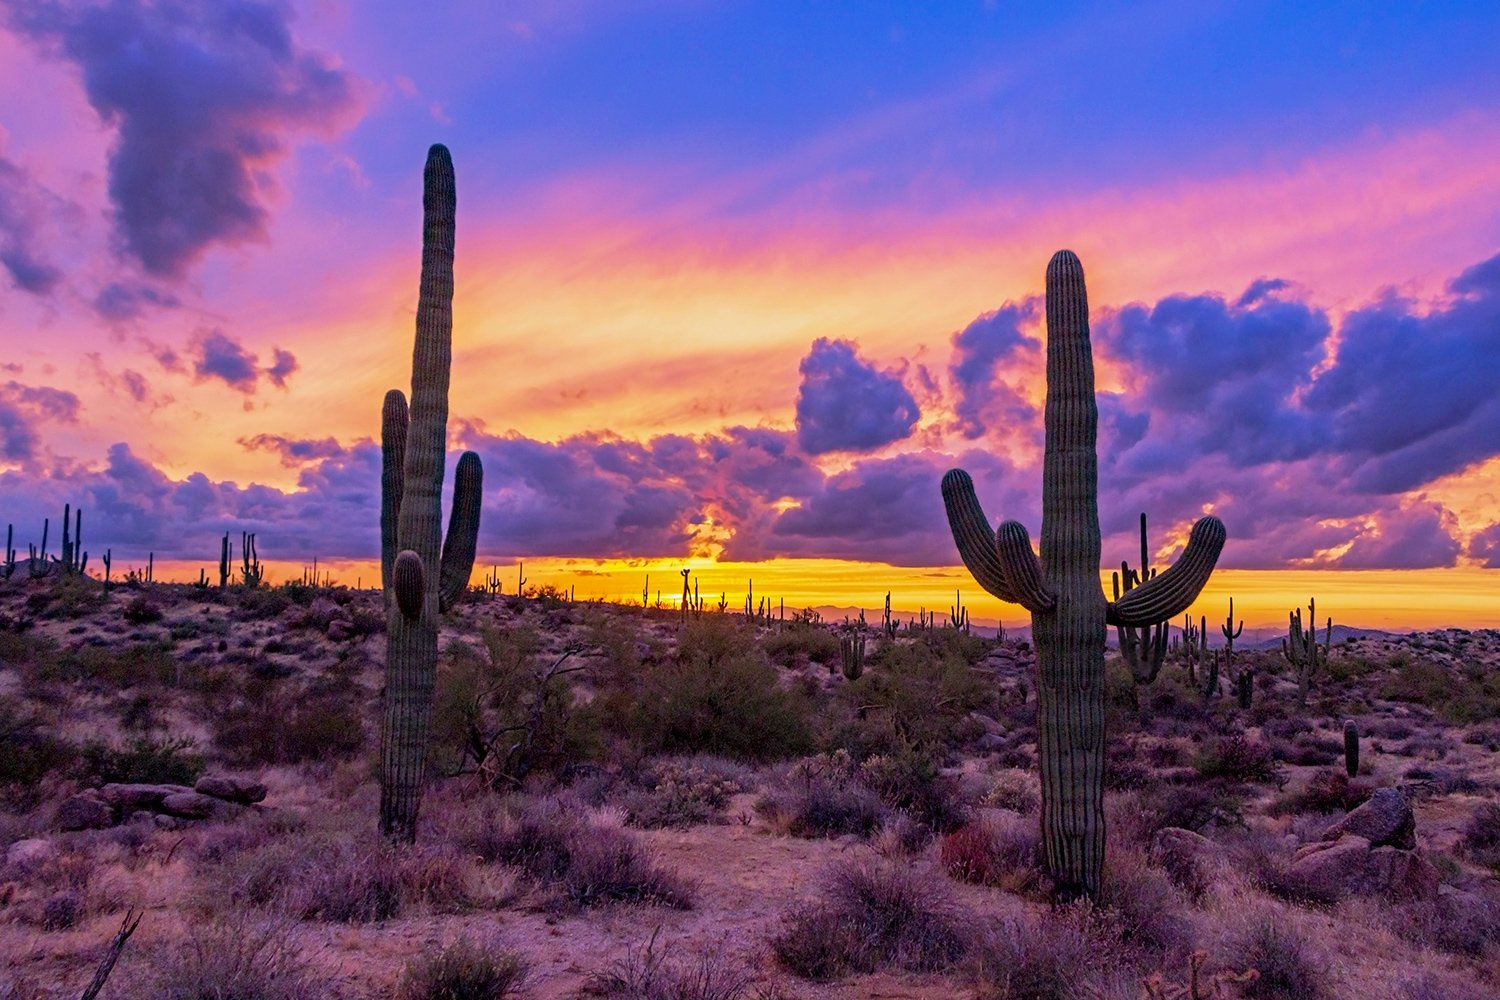 Southwest USA Cactus Stock Images, Photos | Photography